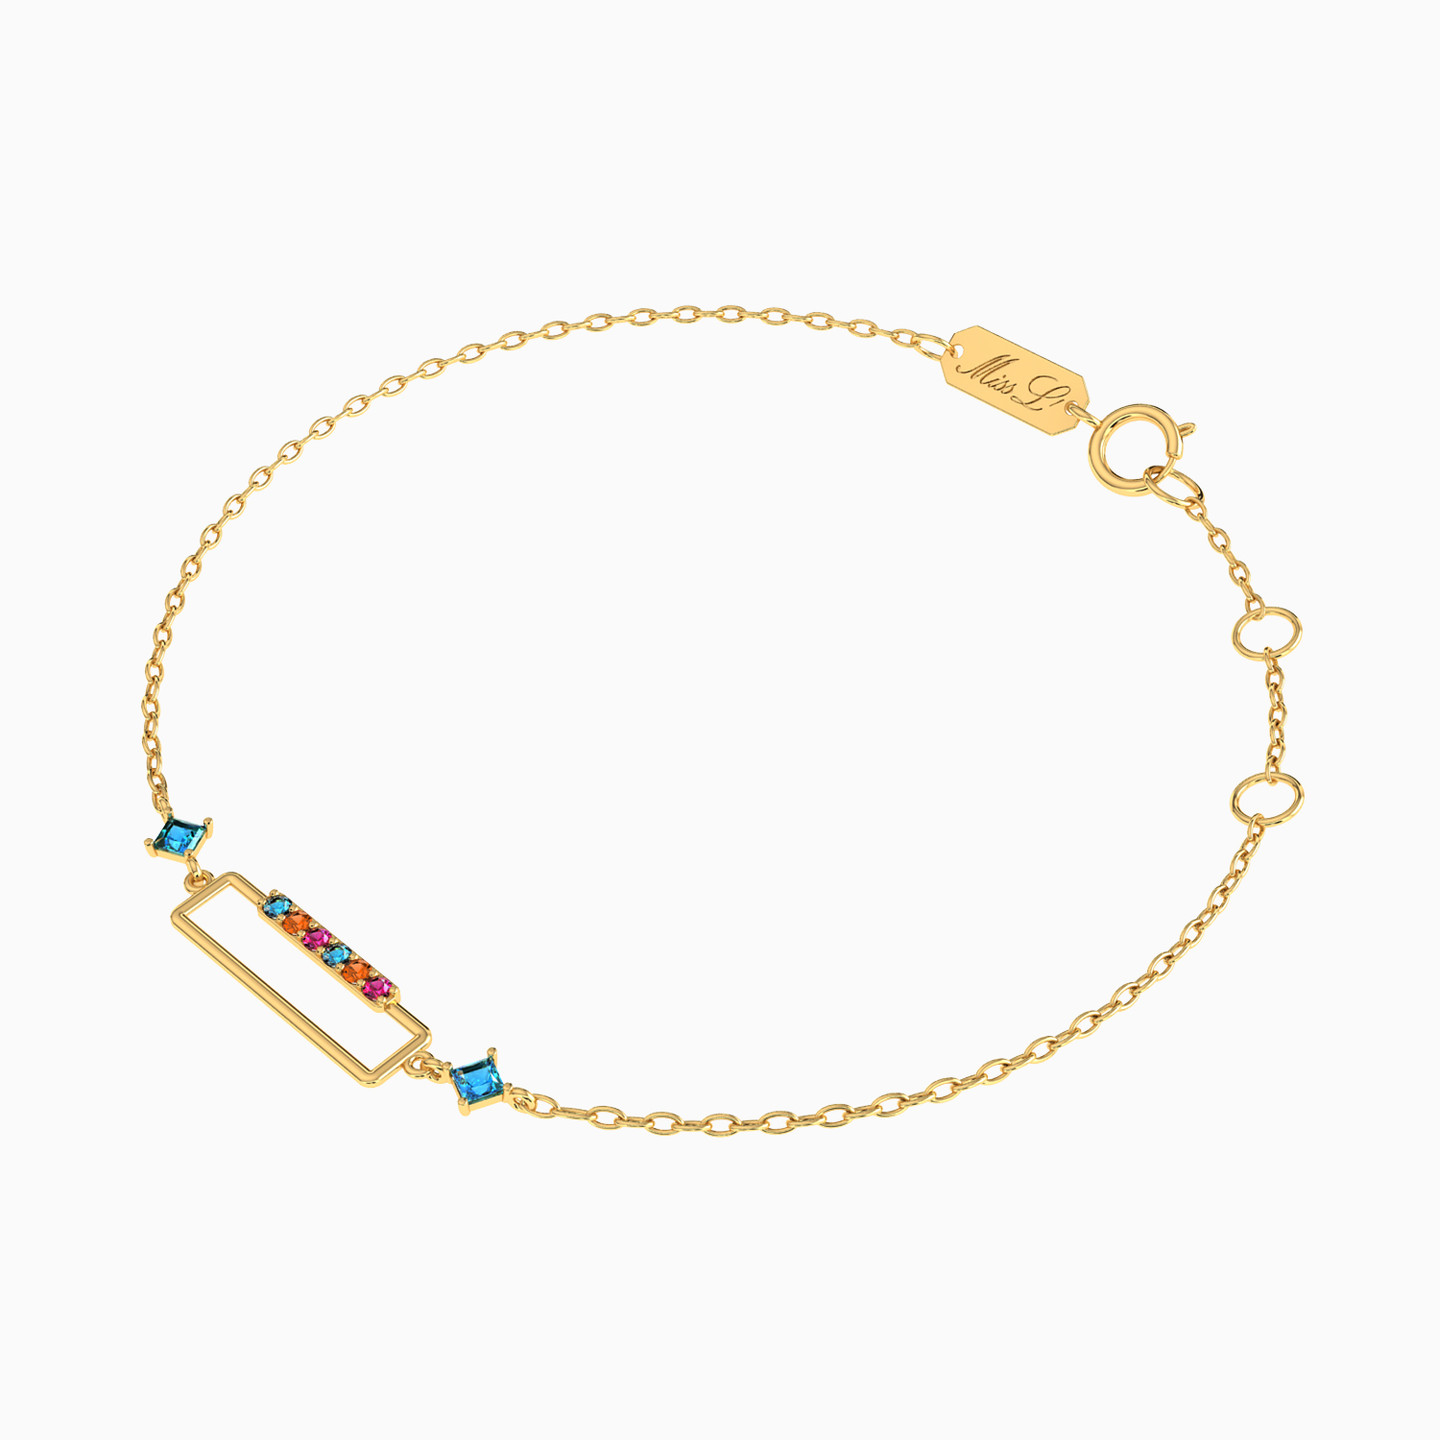 18K Gold Colored Stones Chain Bracelet - 2